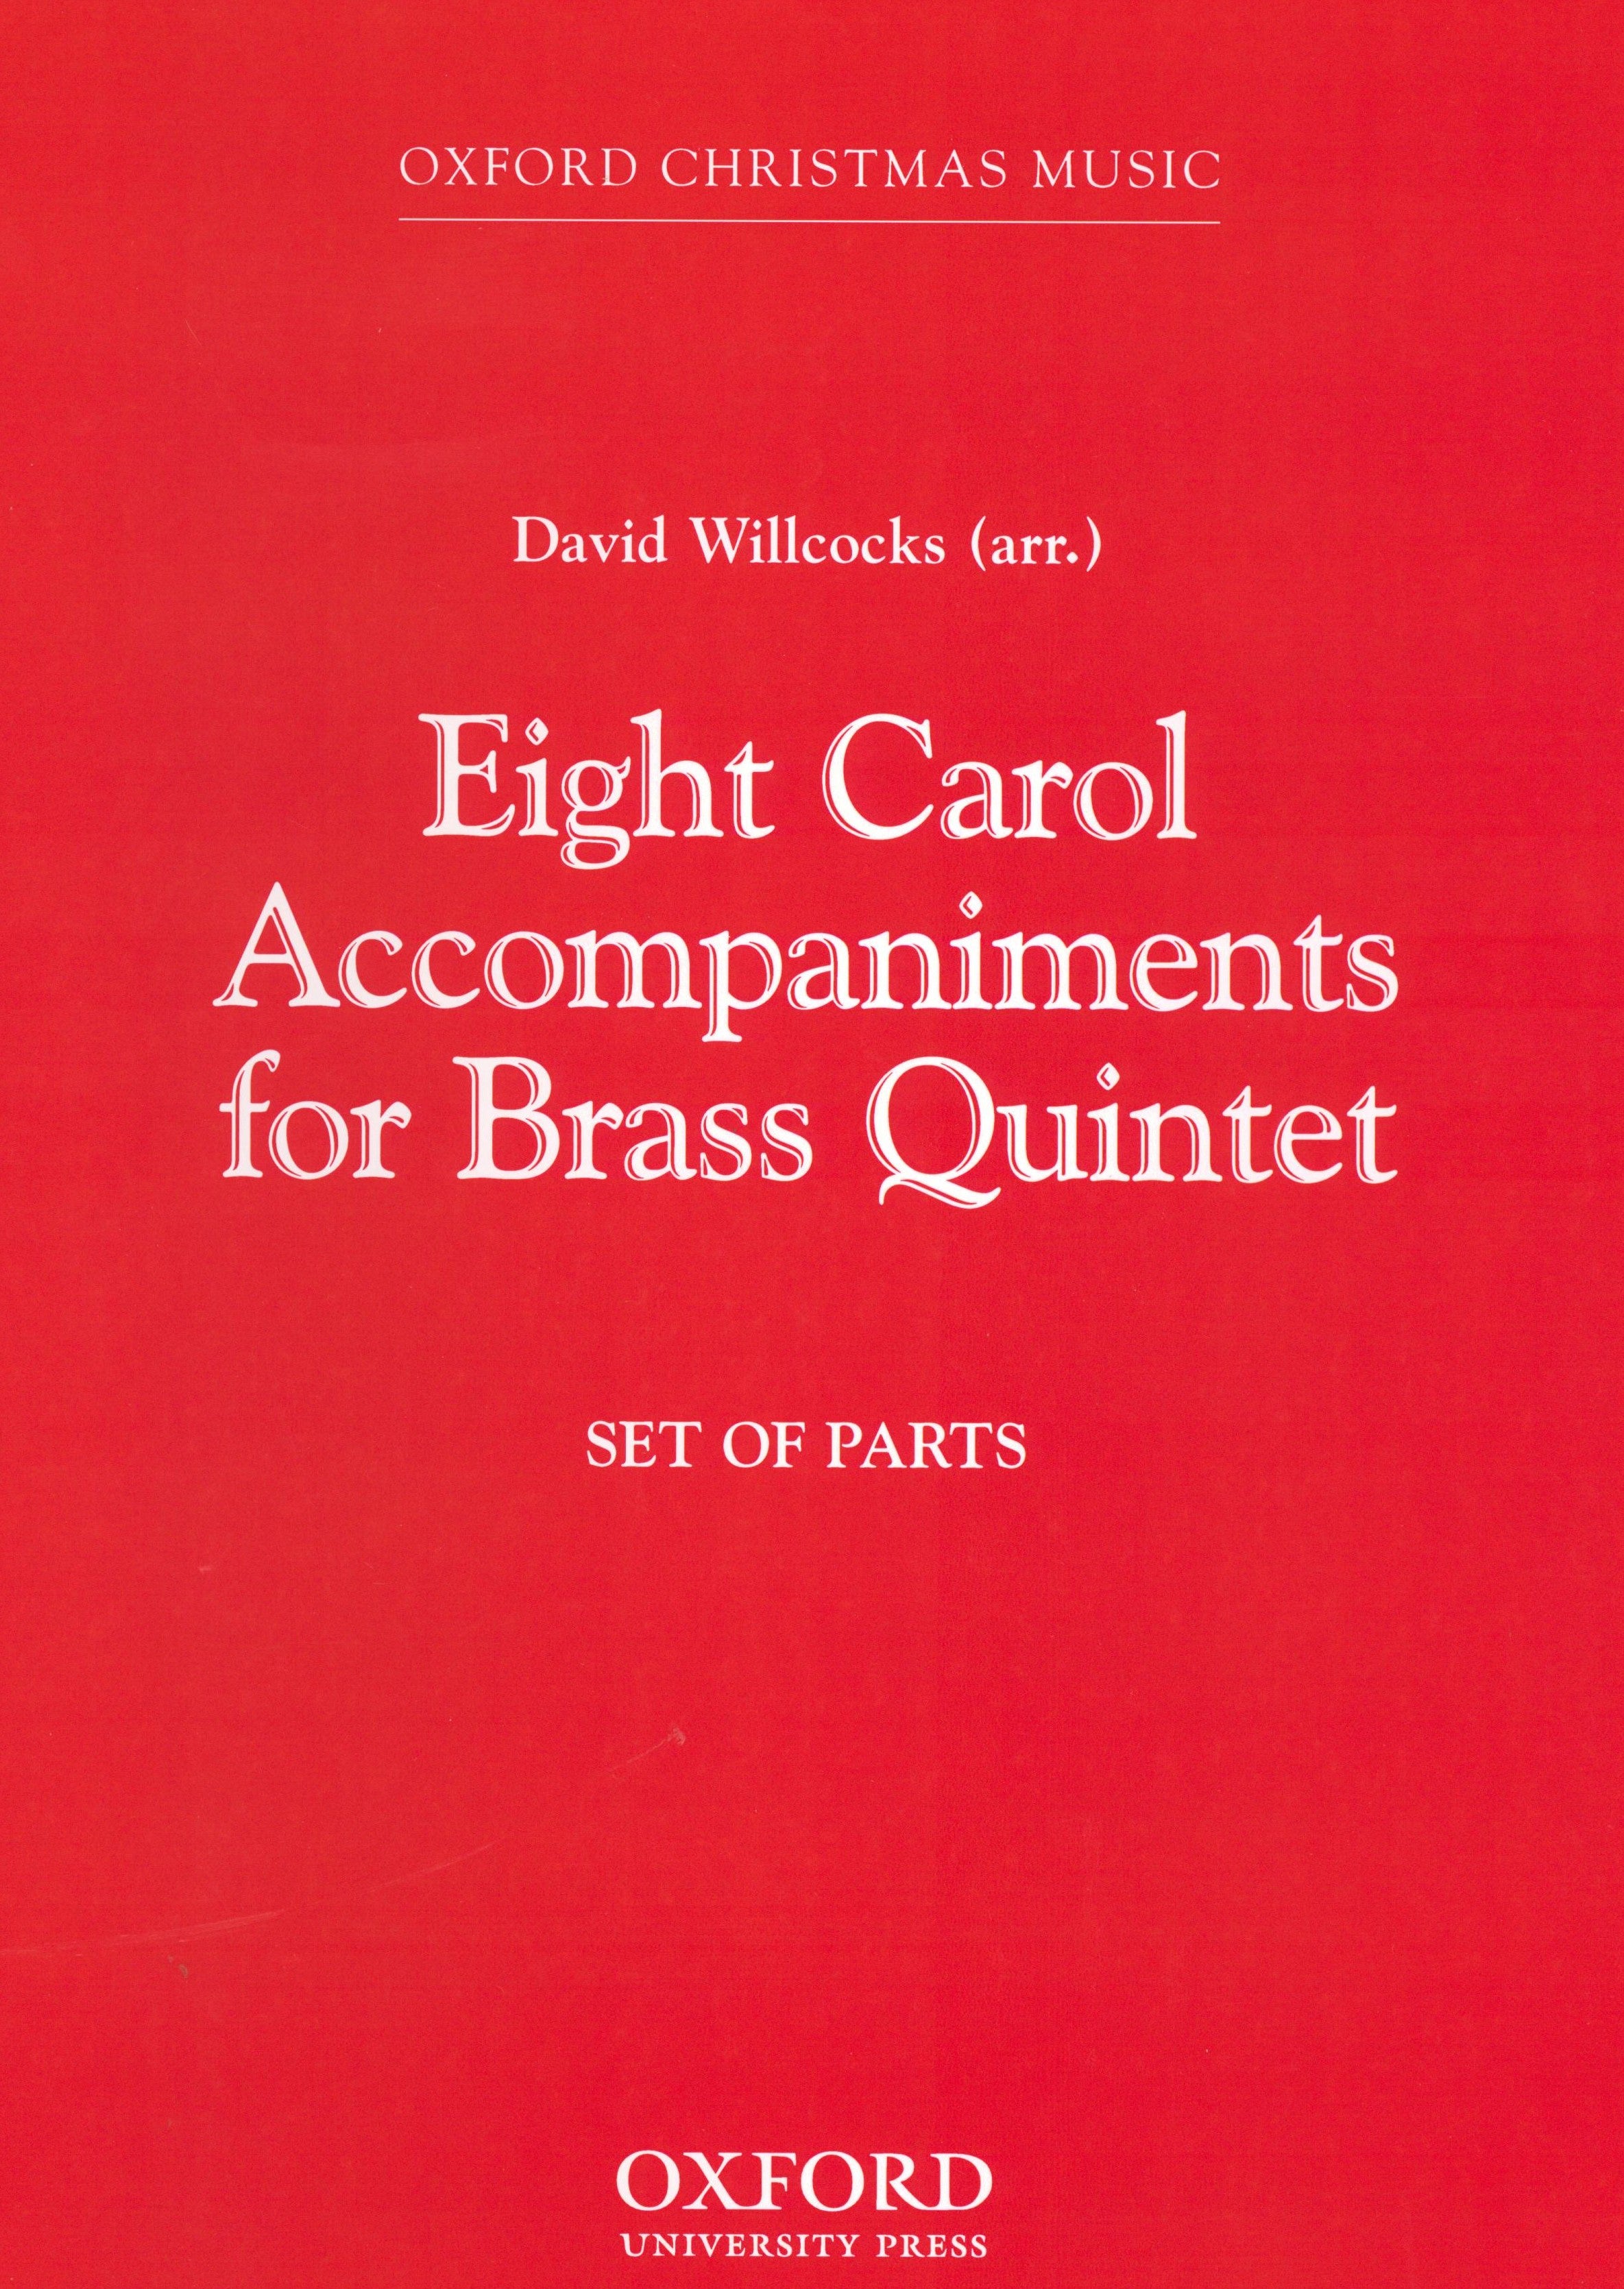 Carol for Brass Brass Quintet (Henderson) archive copy